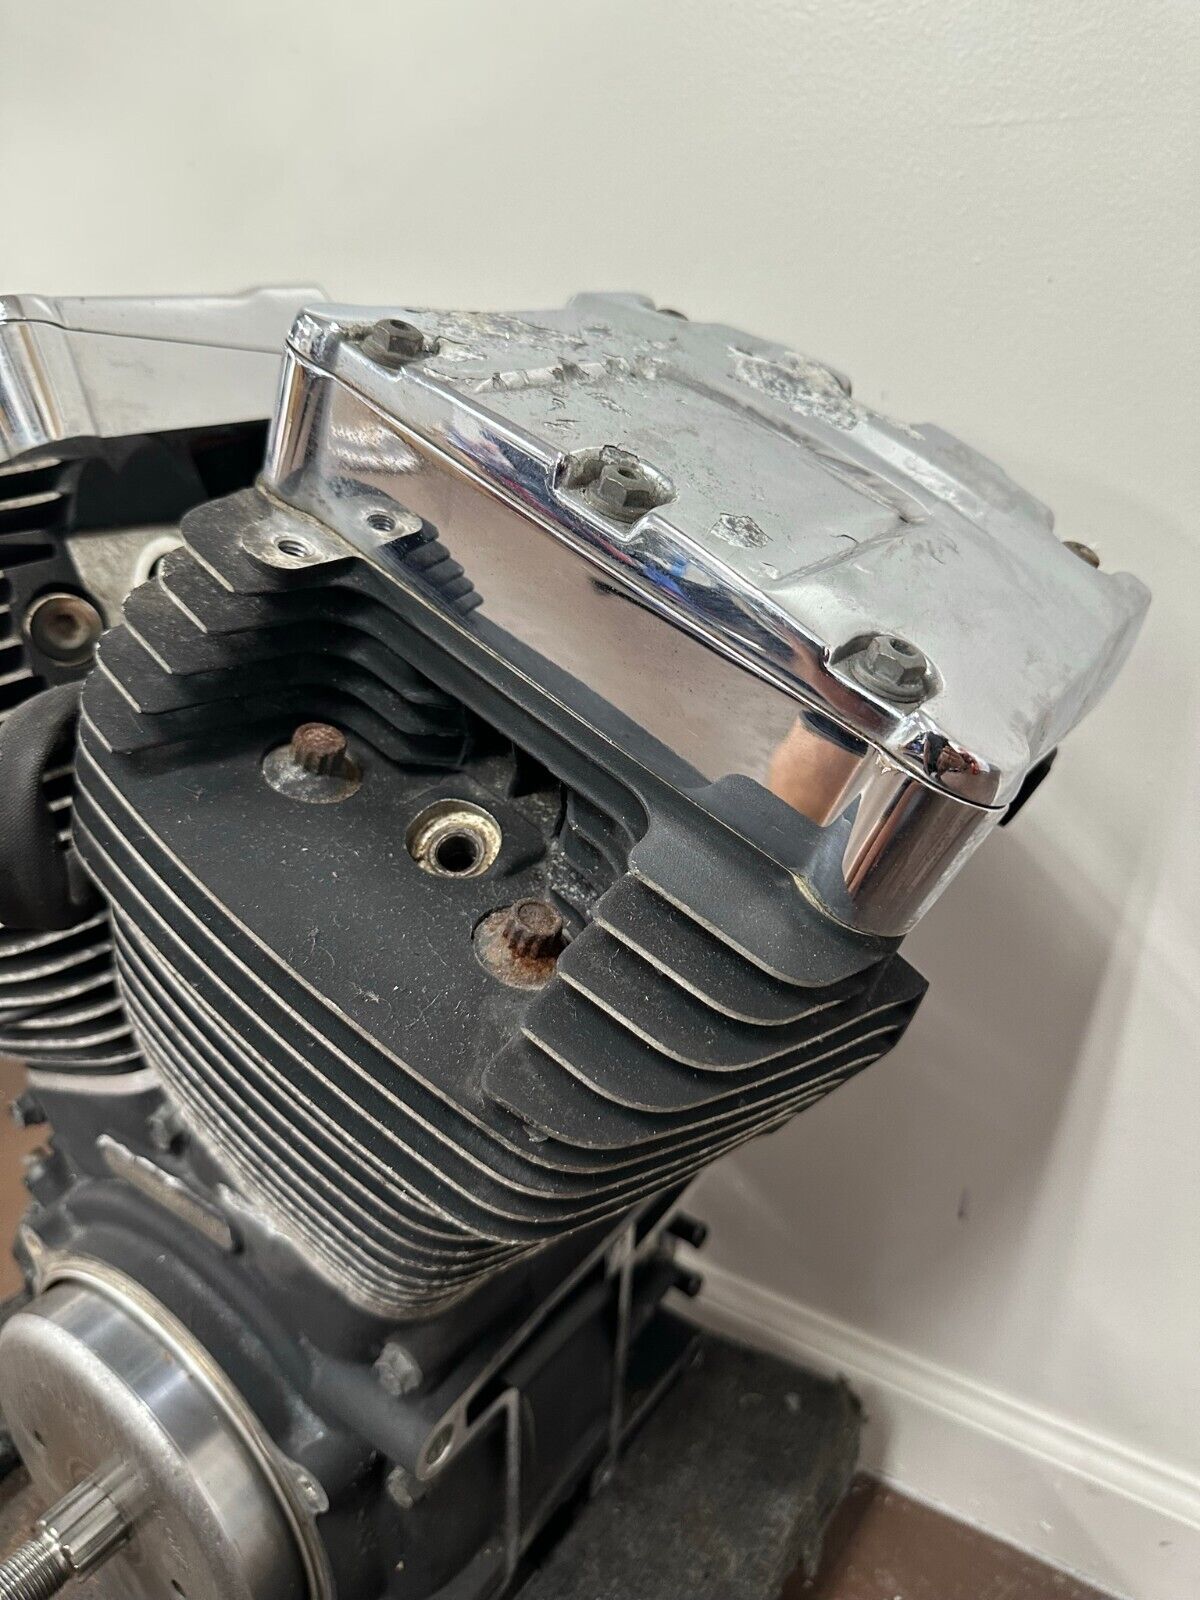 2000 HARLEY DAVIDSON TWIN CAM A ENGINE MOTOR COMPLETE 150 PSI COMPRESSION